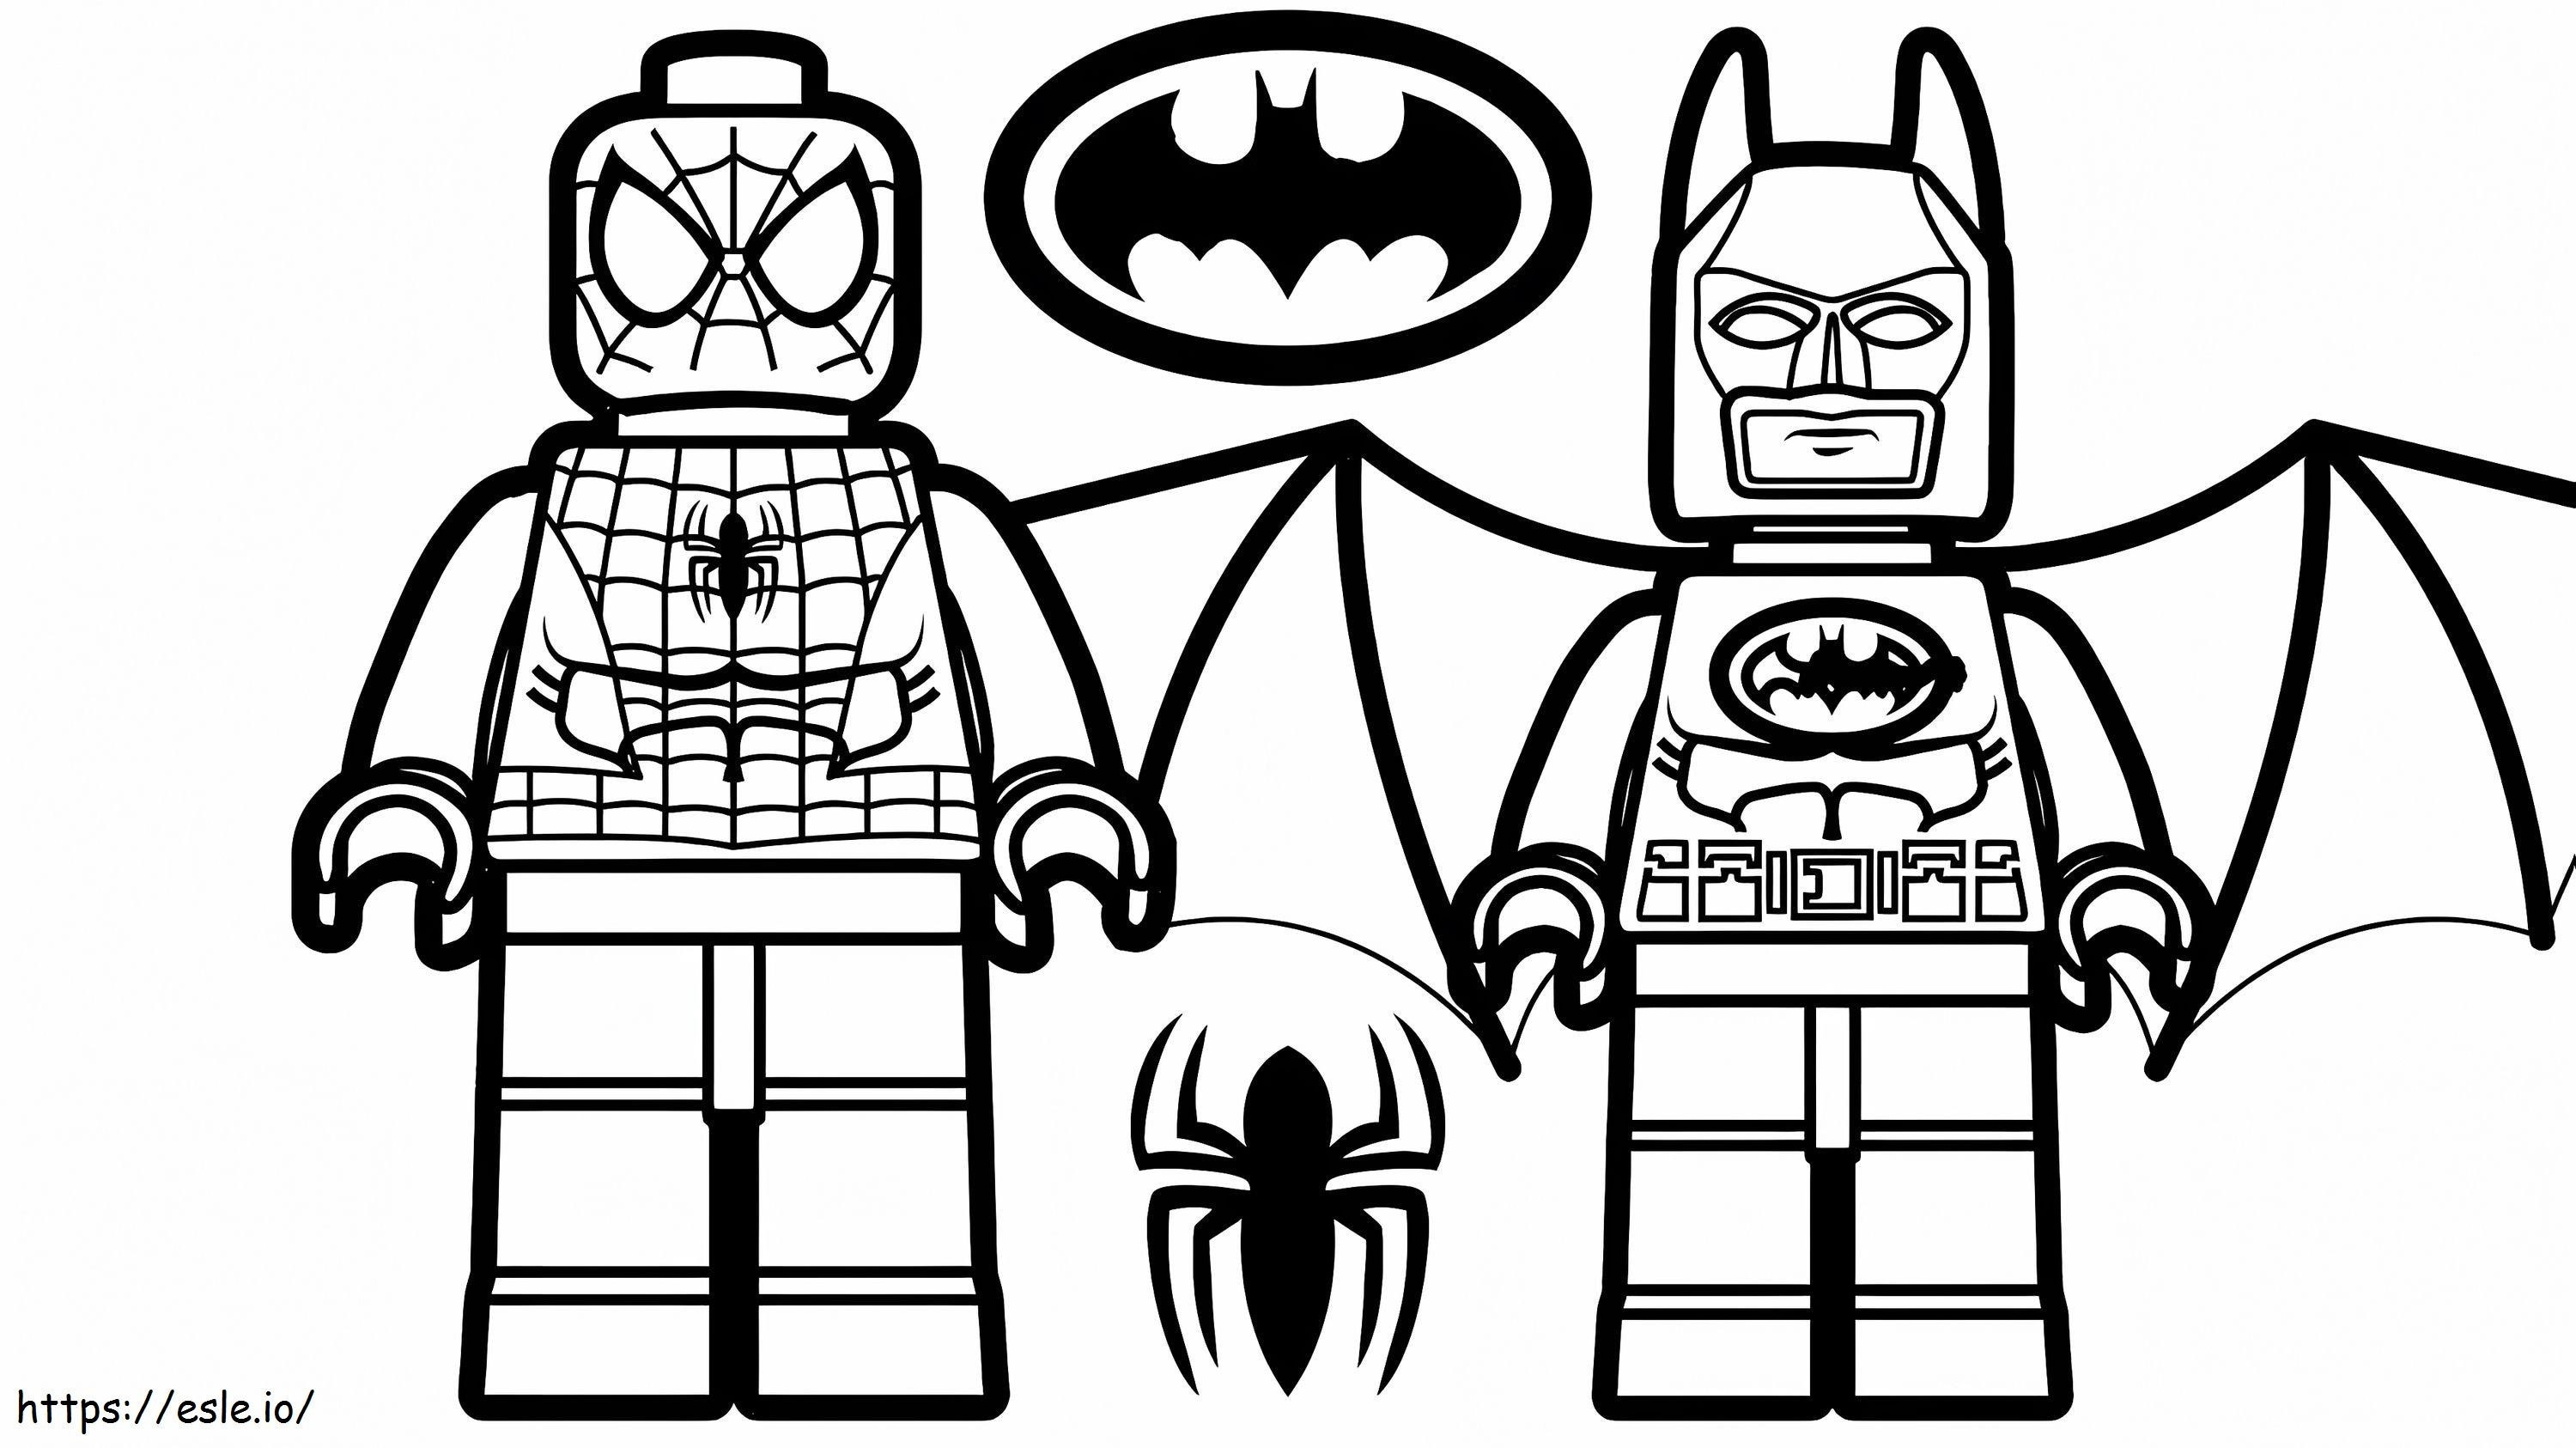 1532141570 Lego Spiderman Dan Lego Batman A4 E1600348956736 Gambar Mewarnai